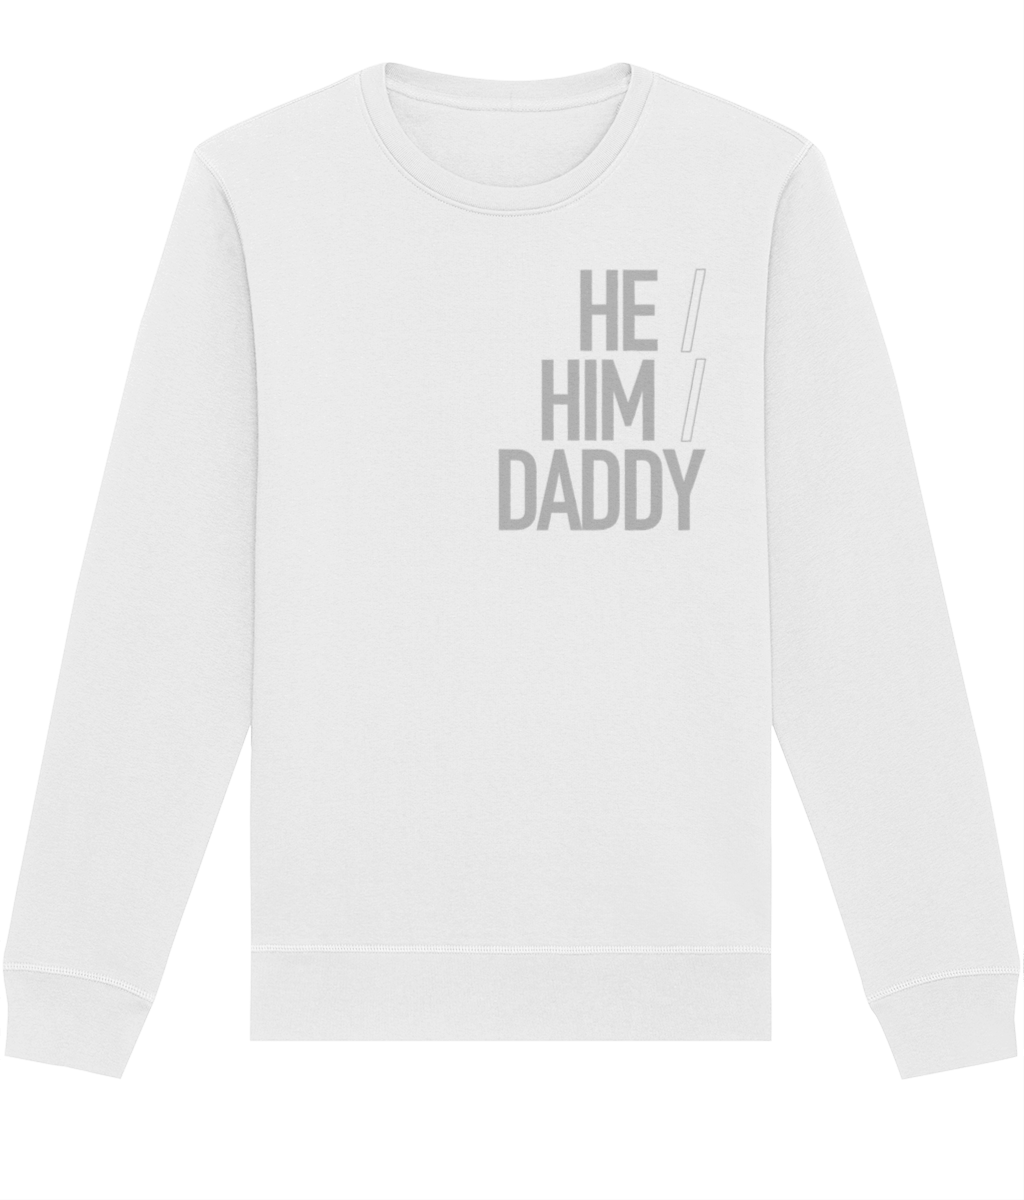 He/Him/Daddy Organic Sweatshirt